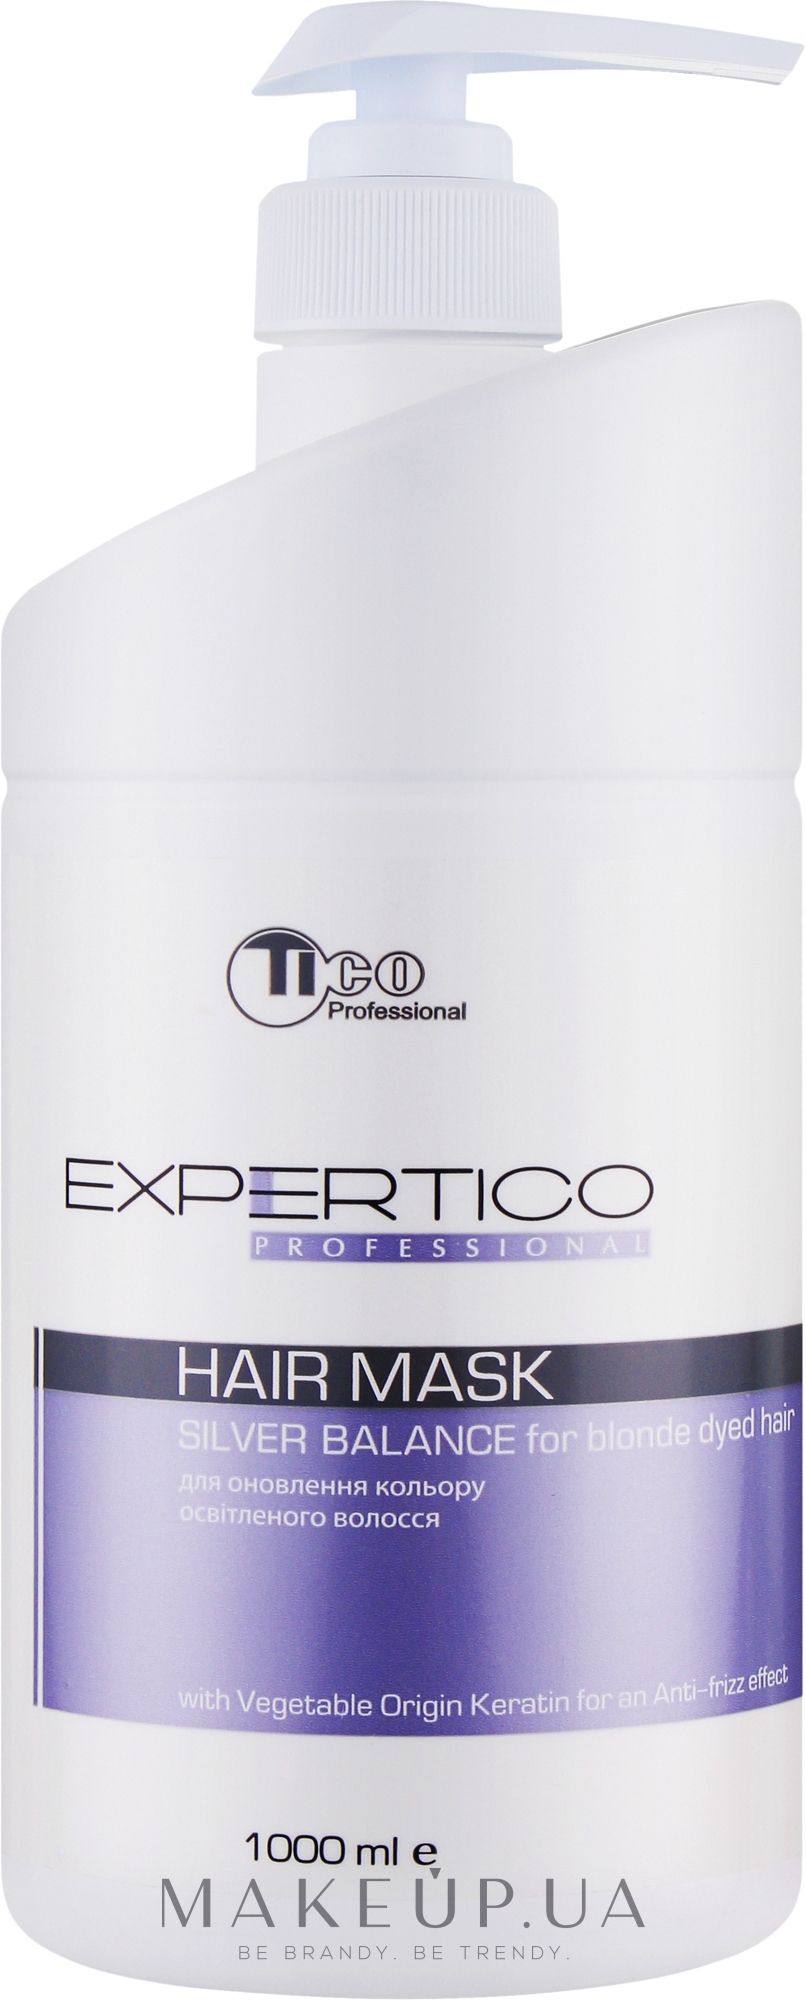 Маска для освітленого волосся - Tico Professional Expertico Silver Balance Mask — фото 1000ml